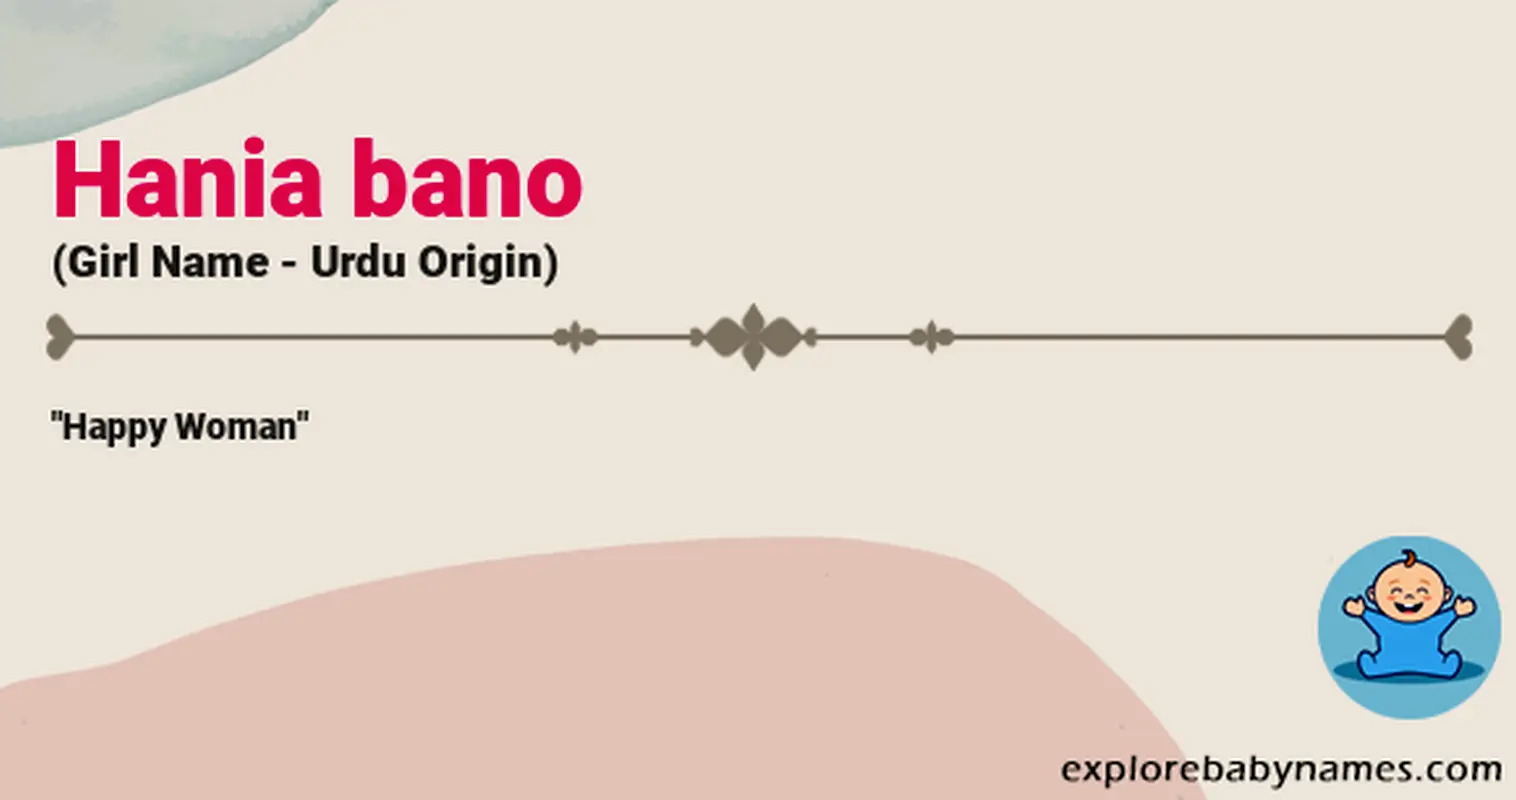 Meaning of Hania bano